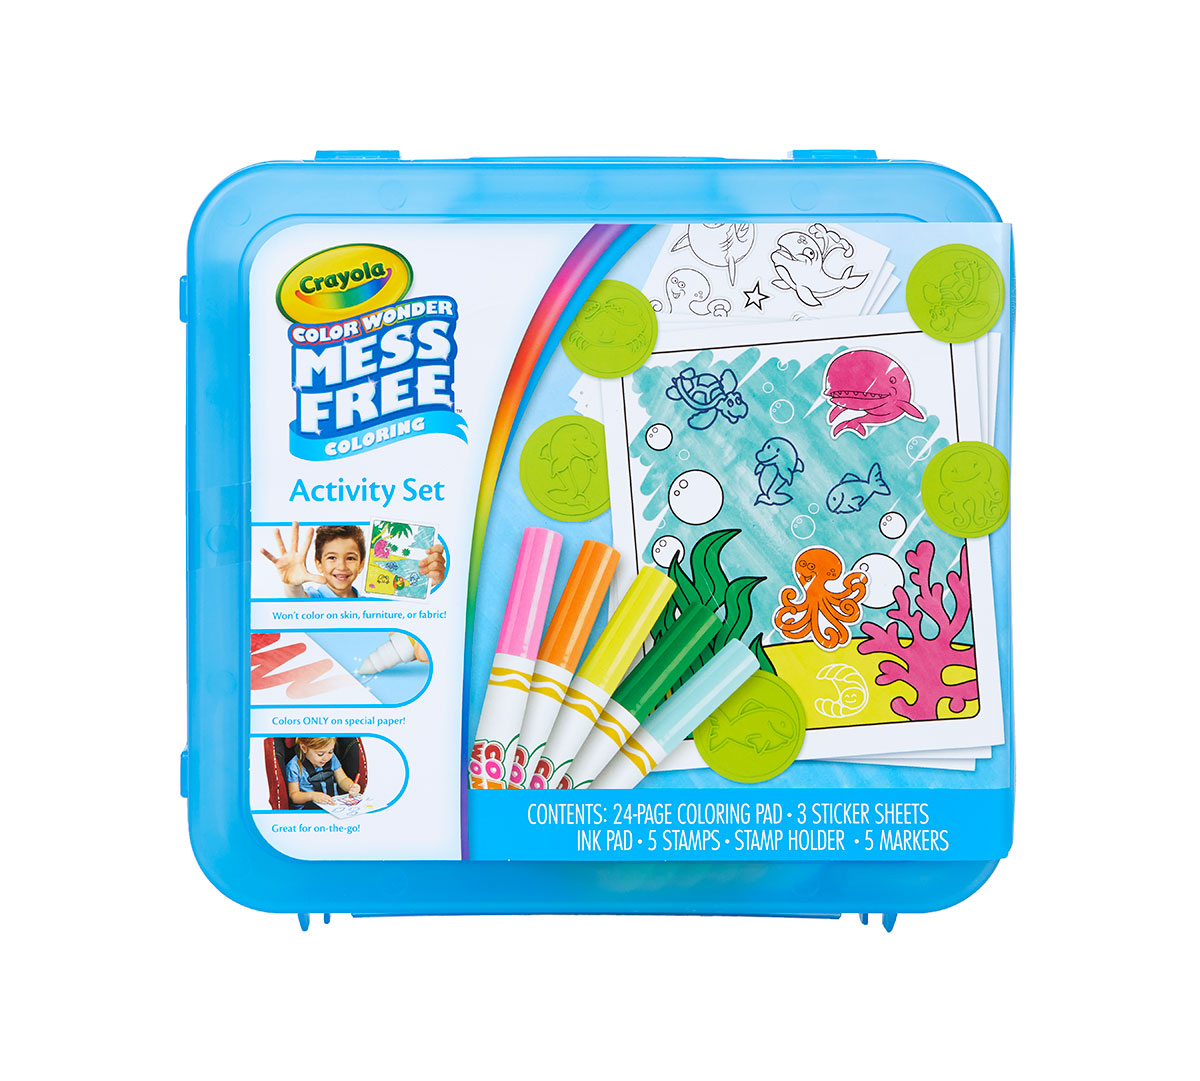 Color Wonder Art Kit Mess Free Coloring Gift Crayola Com Crayola